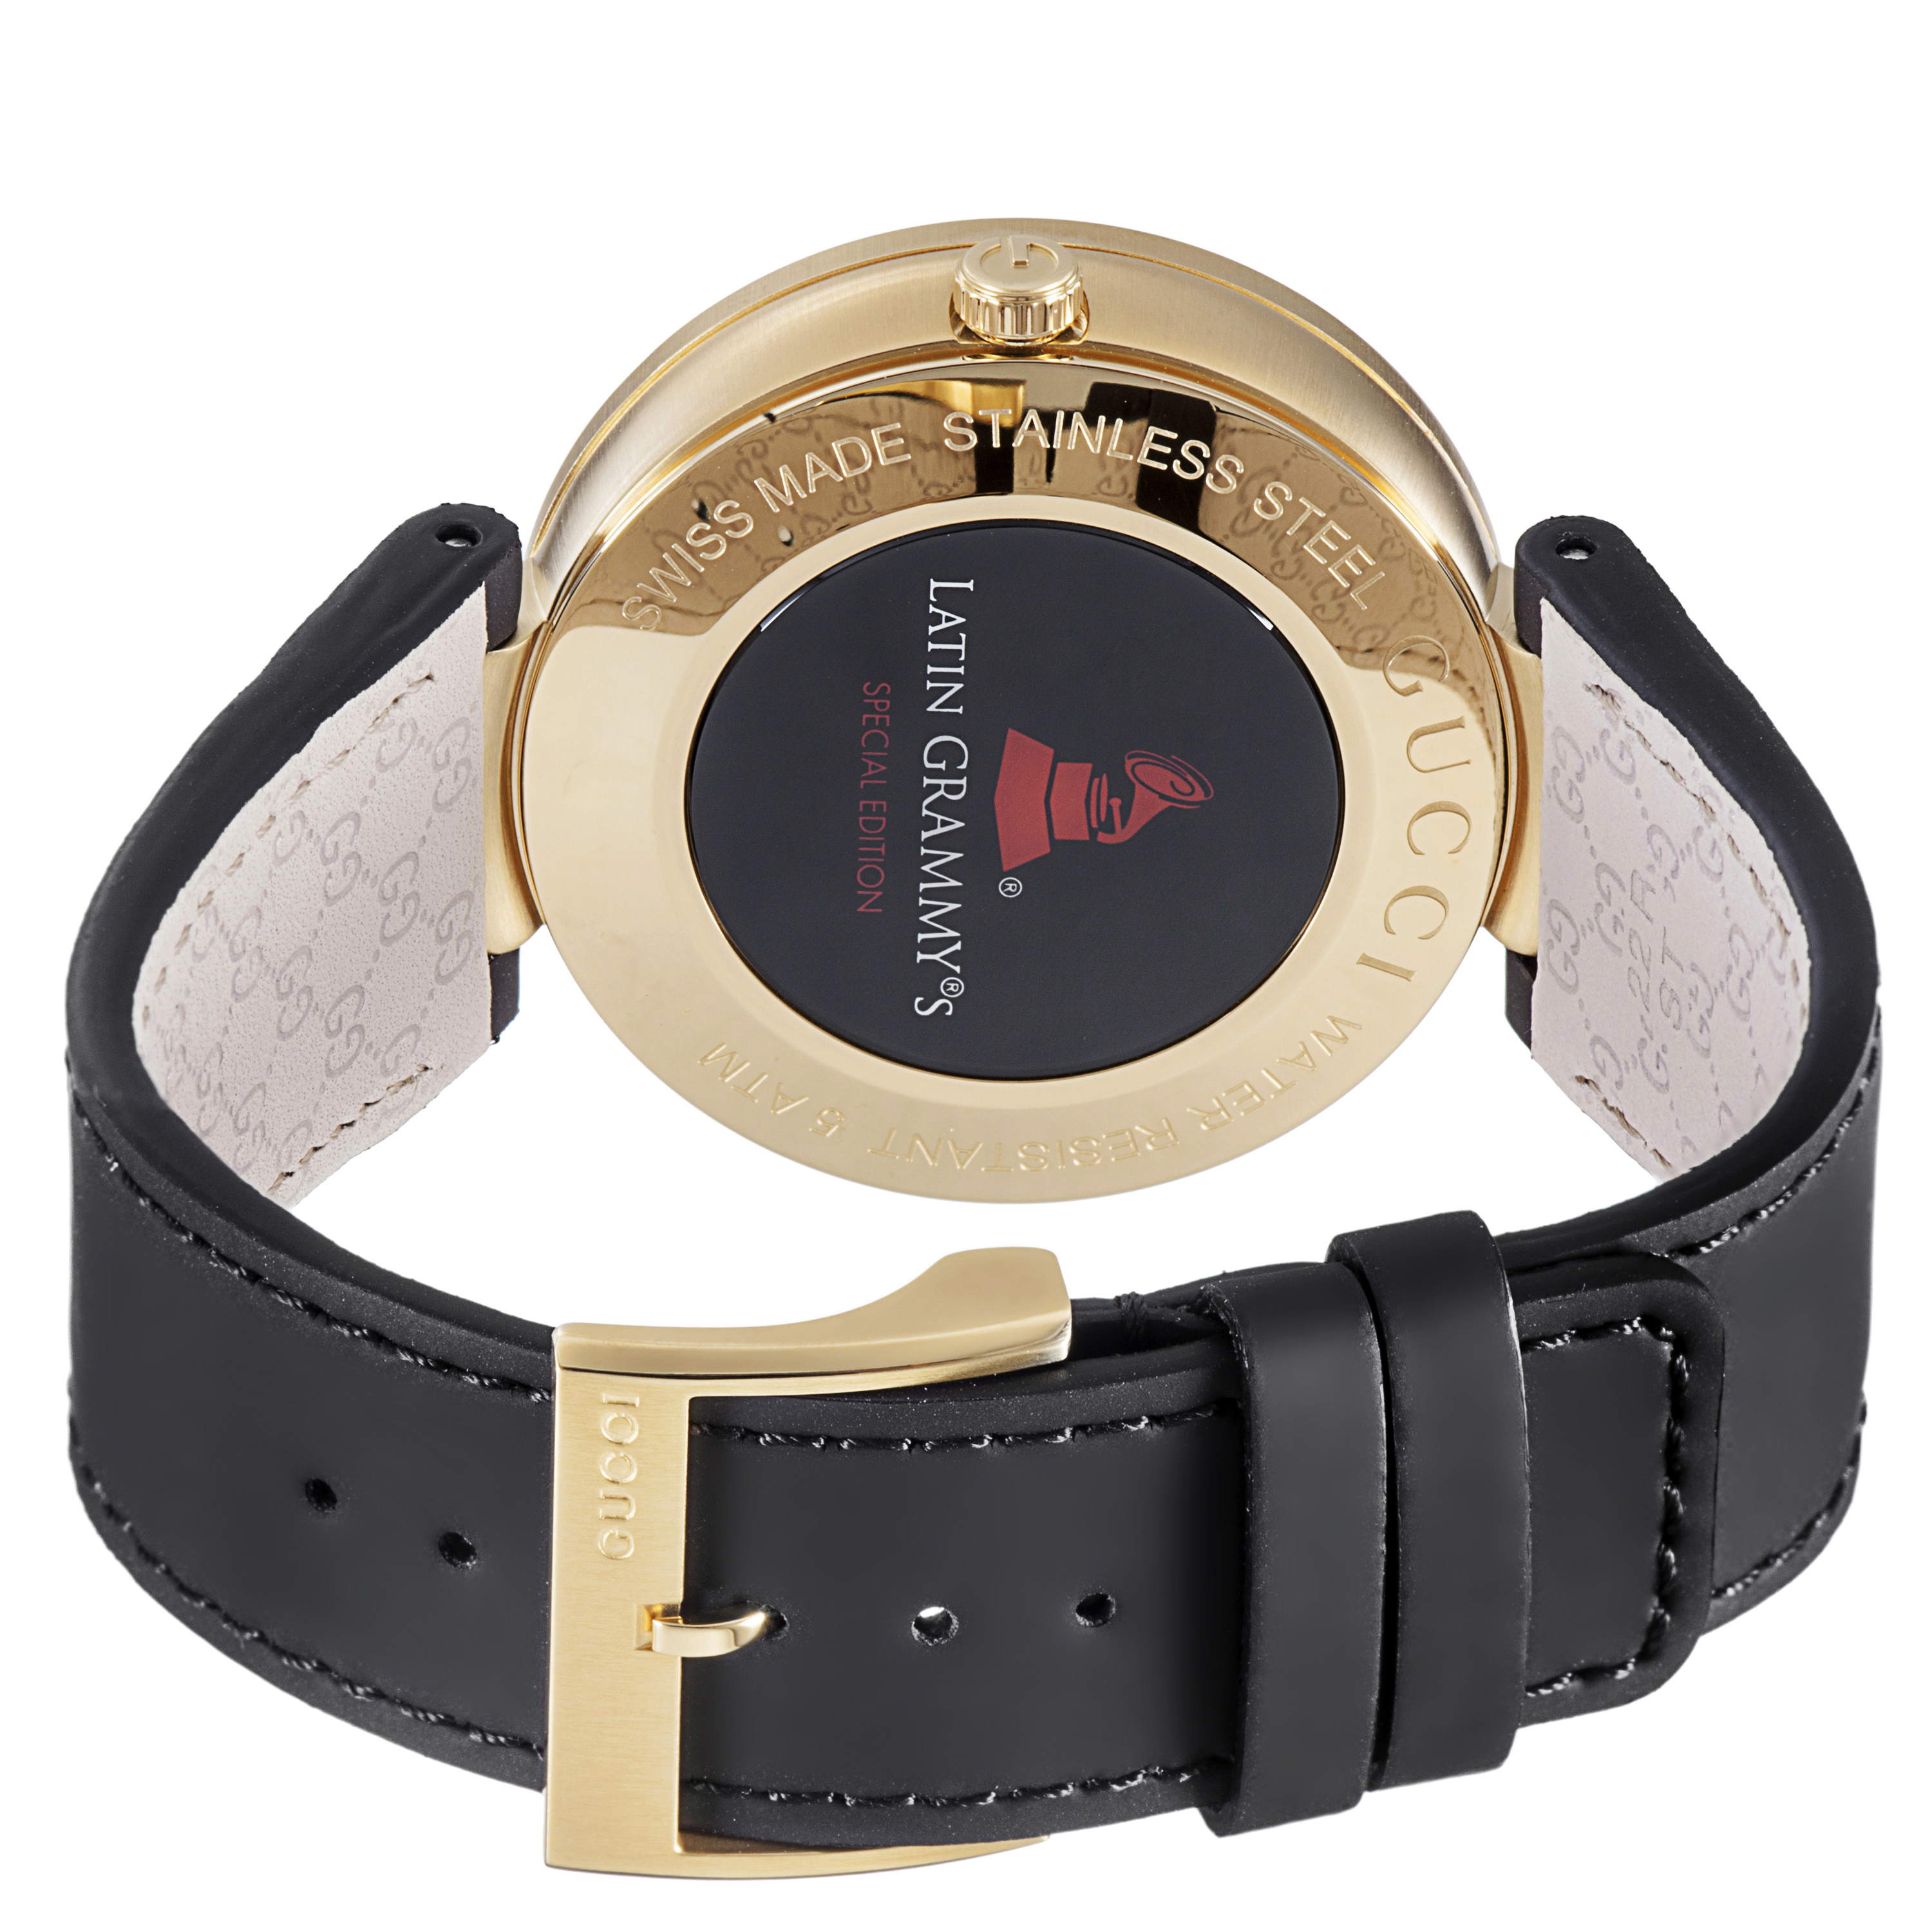 Gucci Interlocking Special Edition Grammy Men's Watch Model: YA133208